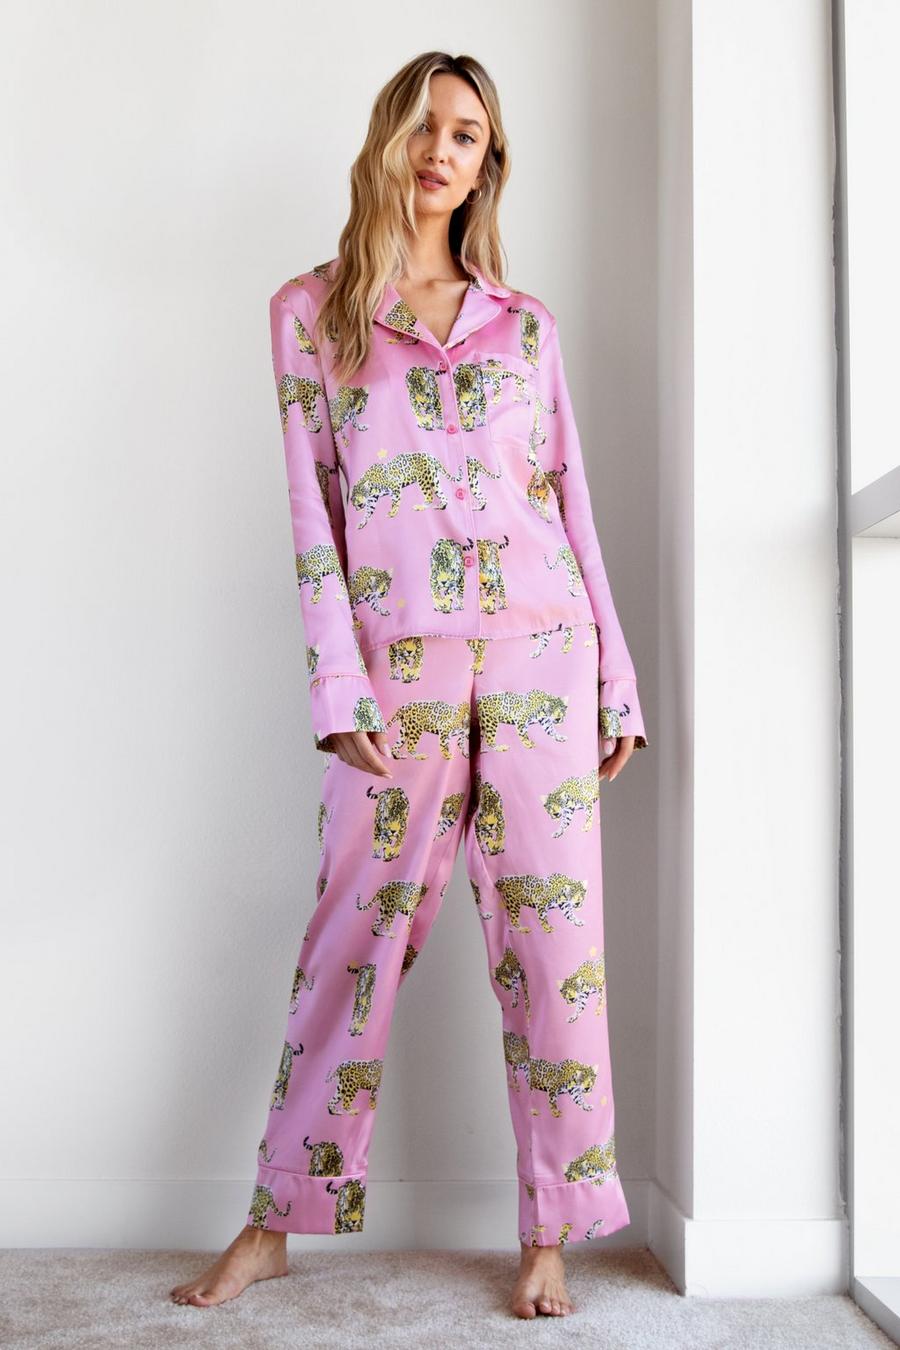 Cheetahs Always Prosper Satin Shirt and Pajama Set